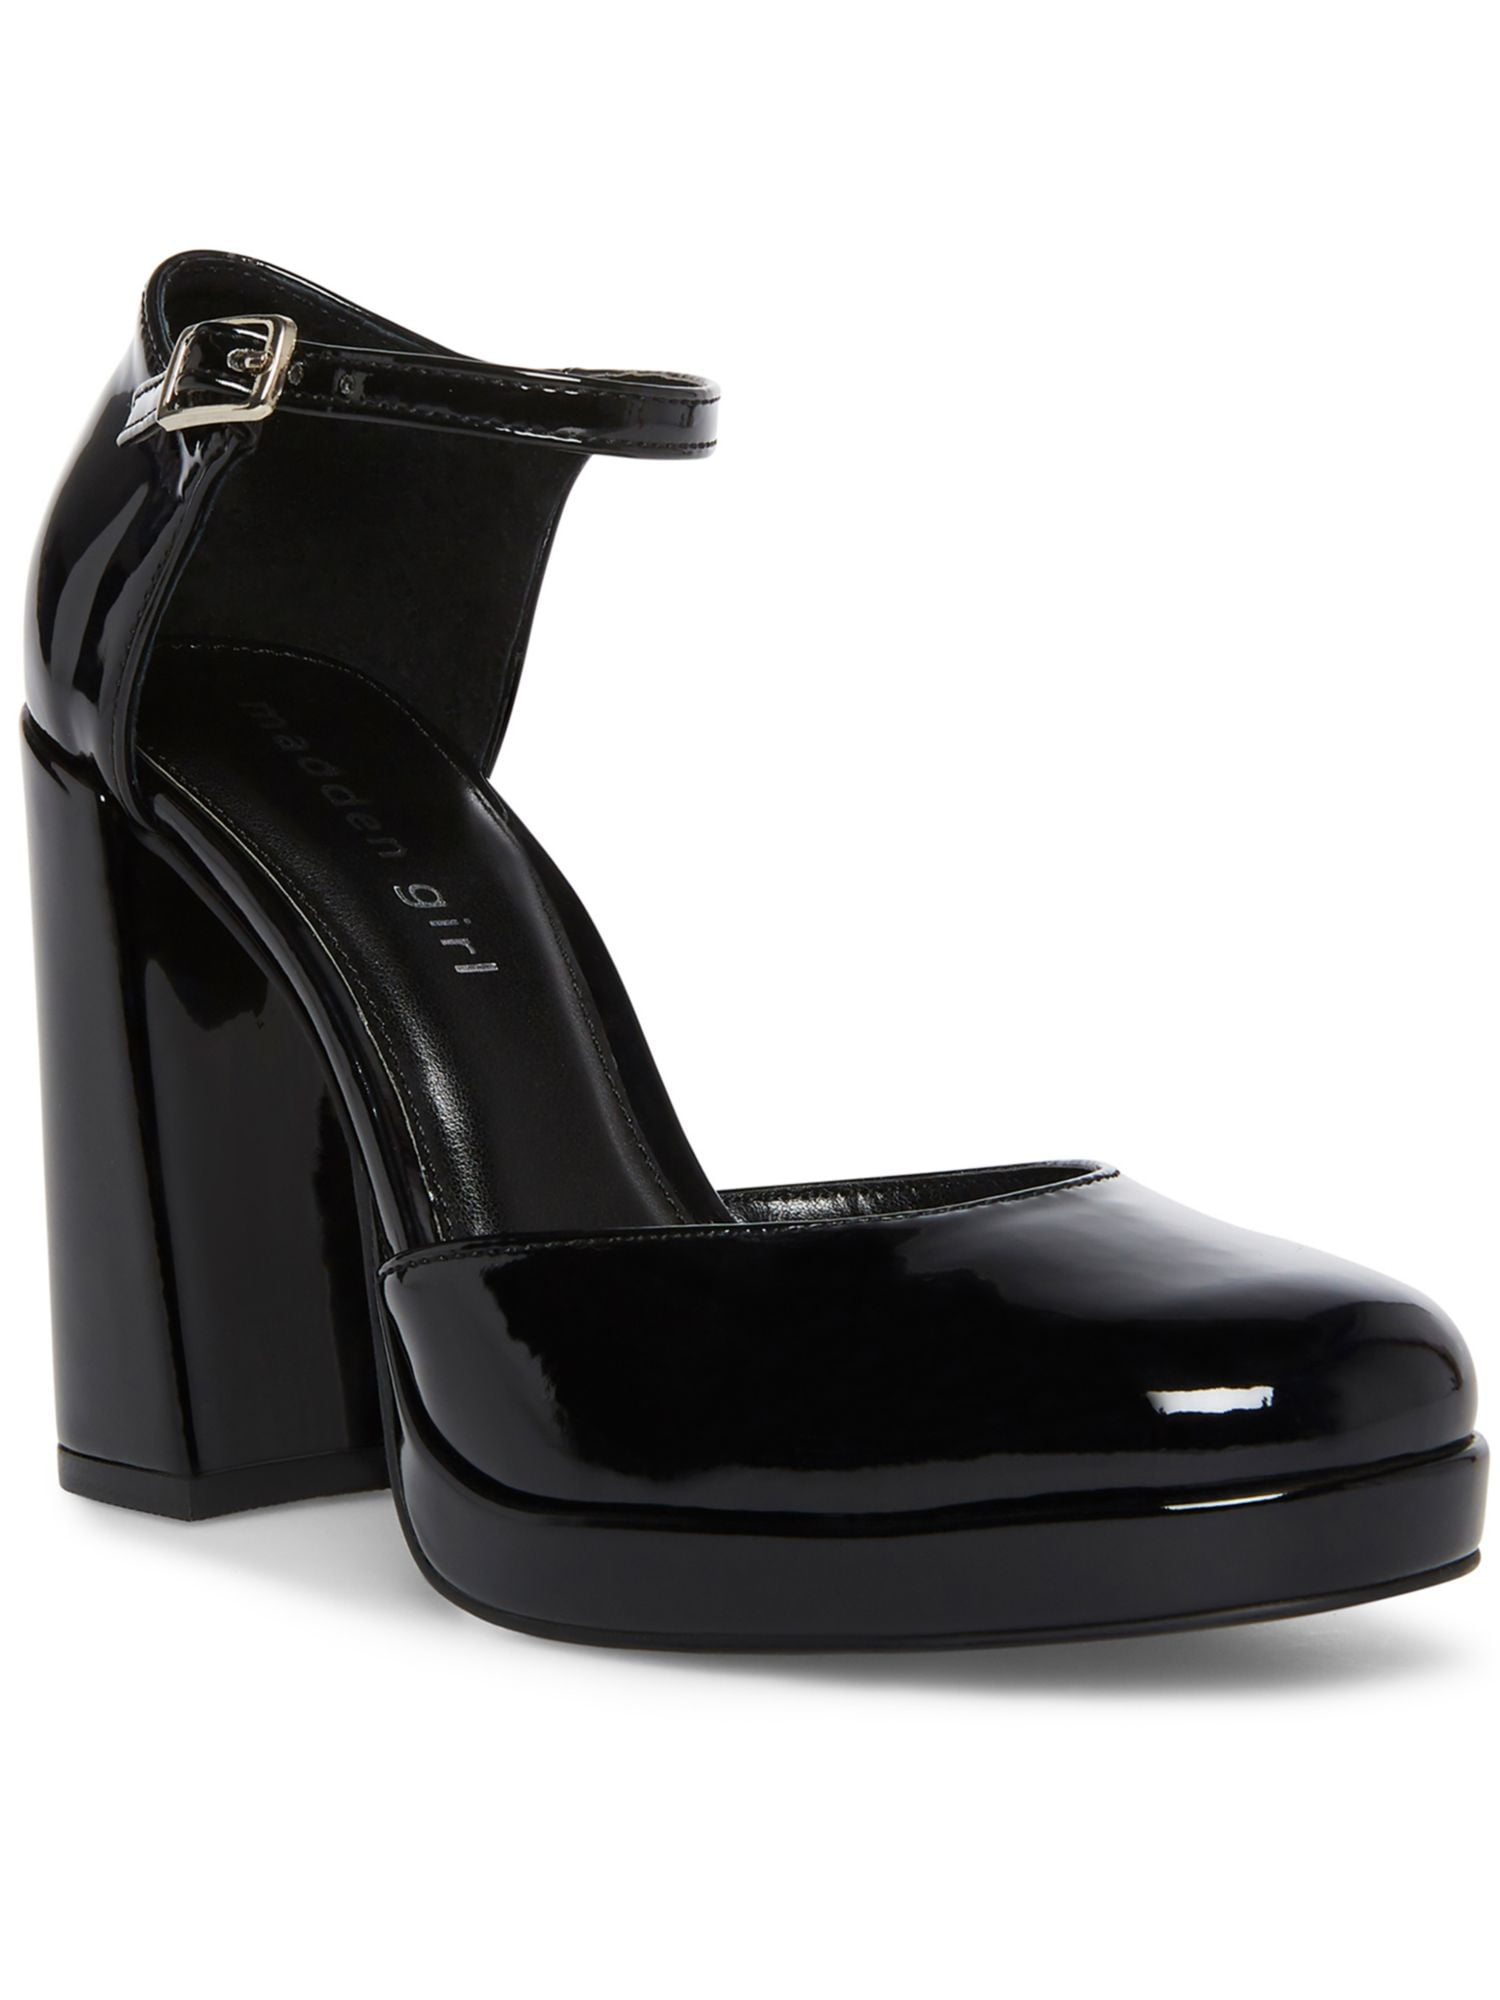 Buy Fashion Trending High Heels online | Lazada.com.ph